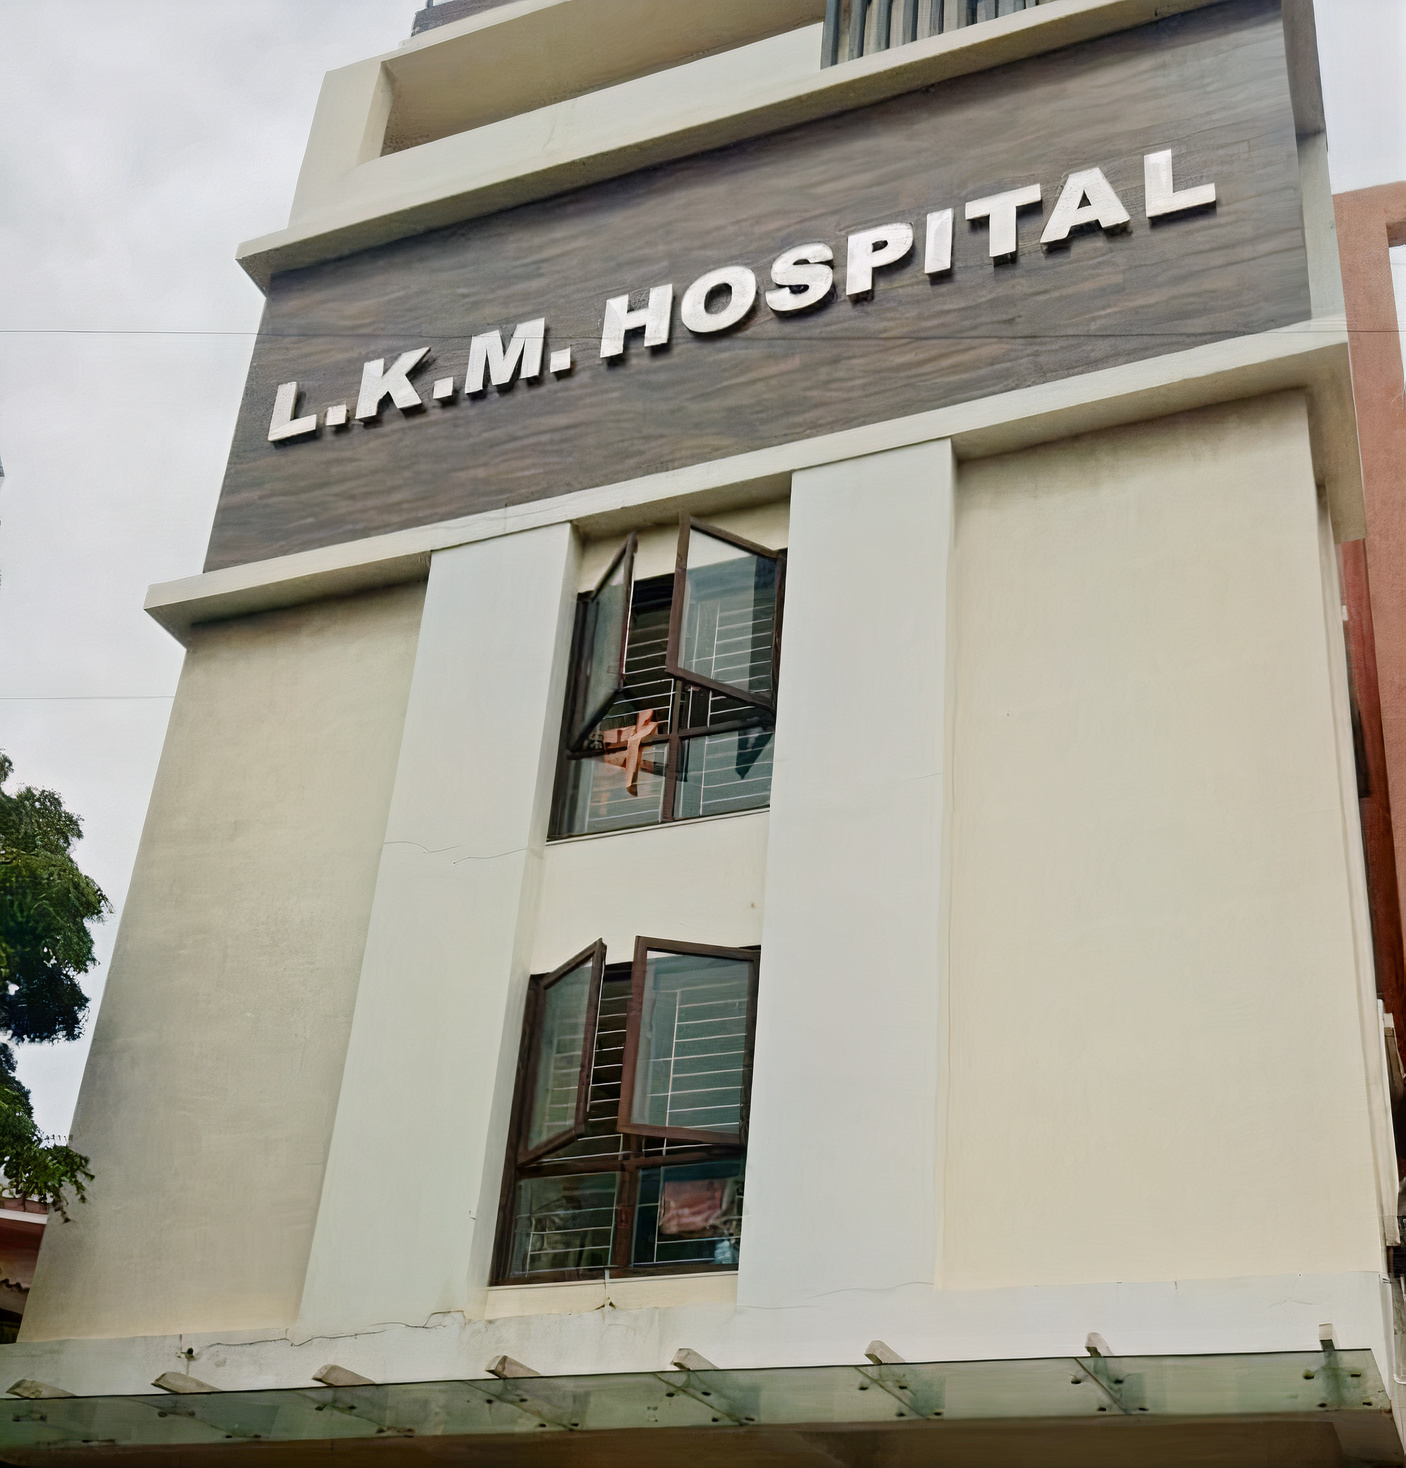 L. K. M. Hospital